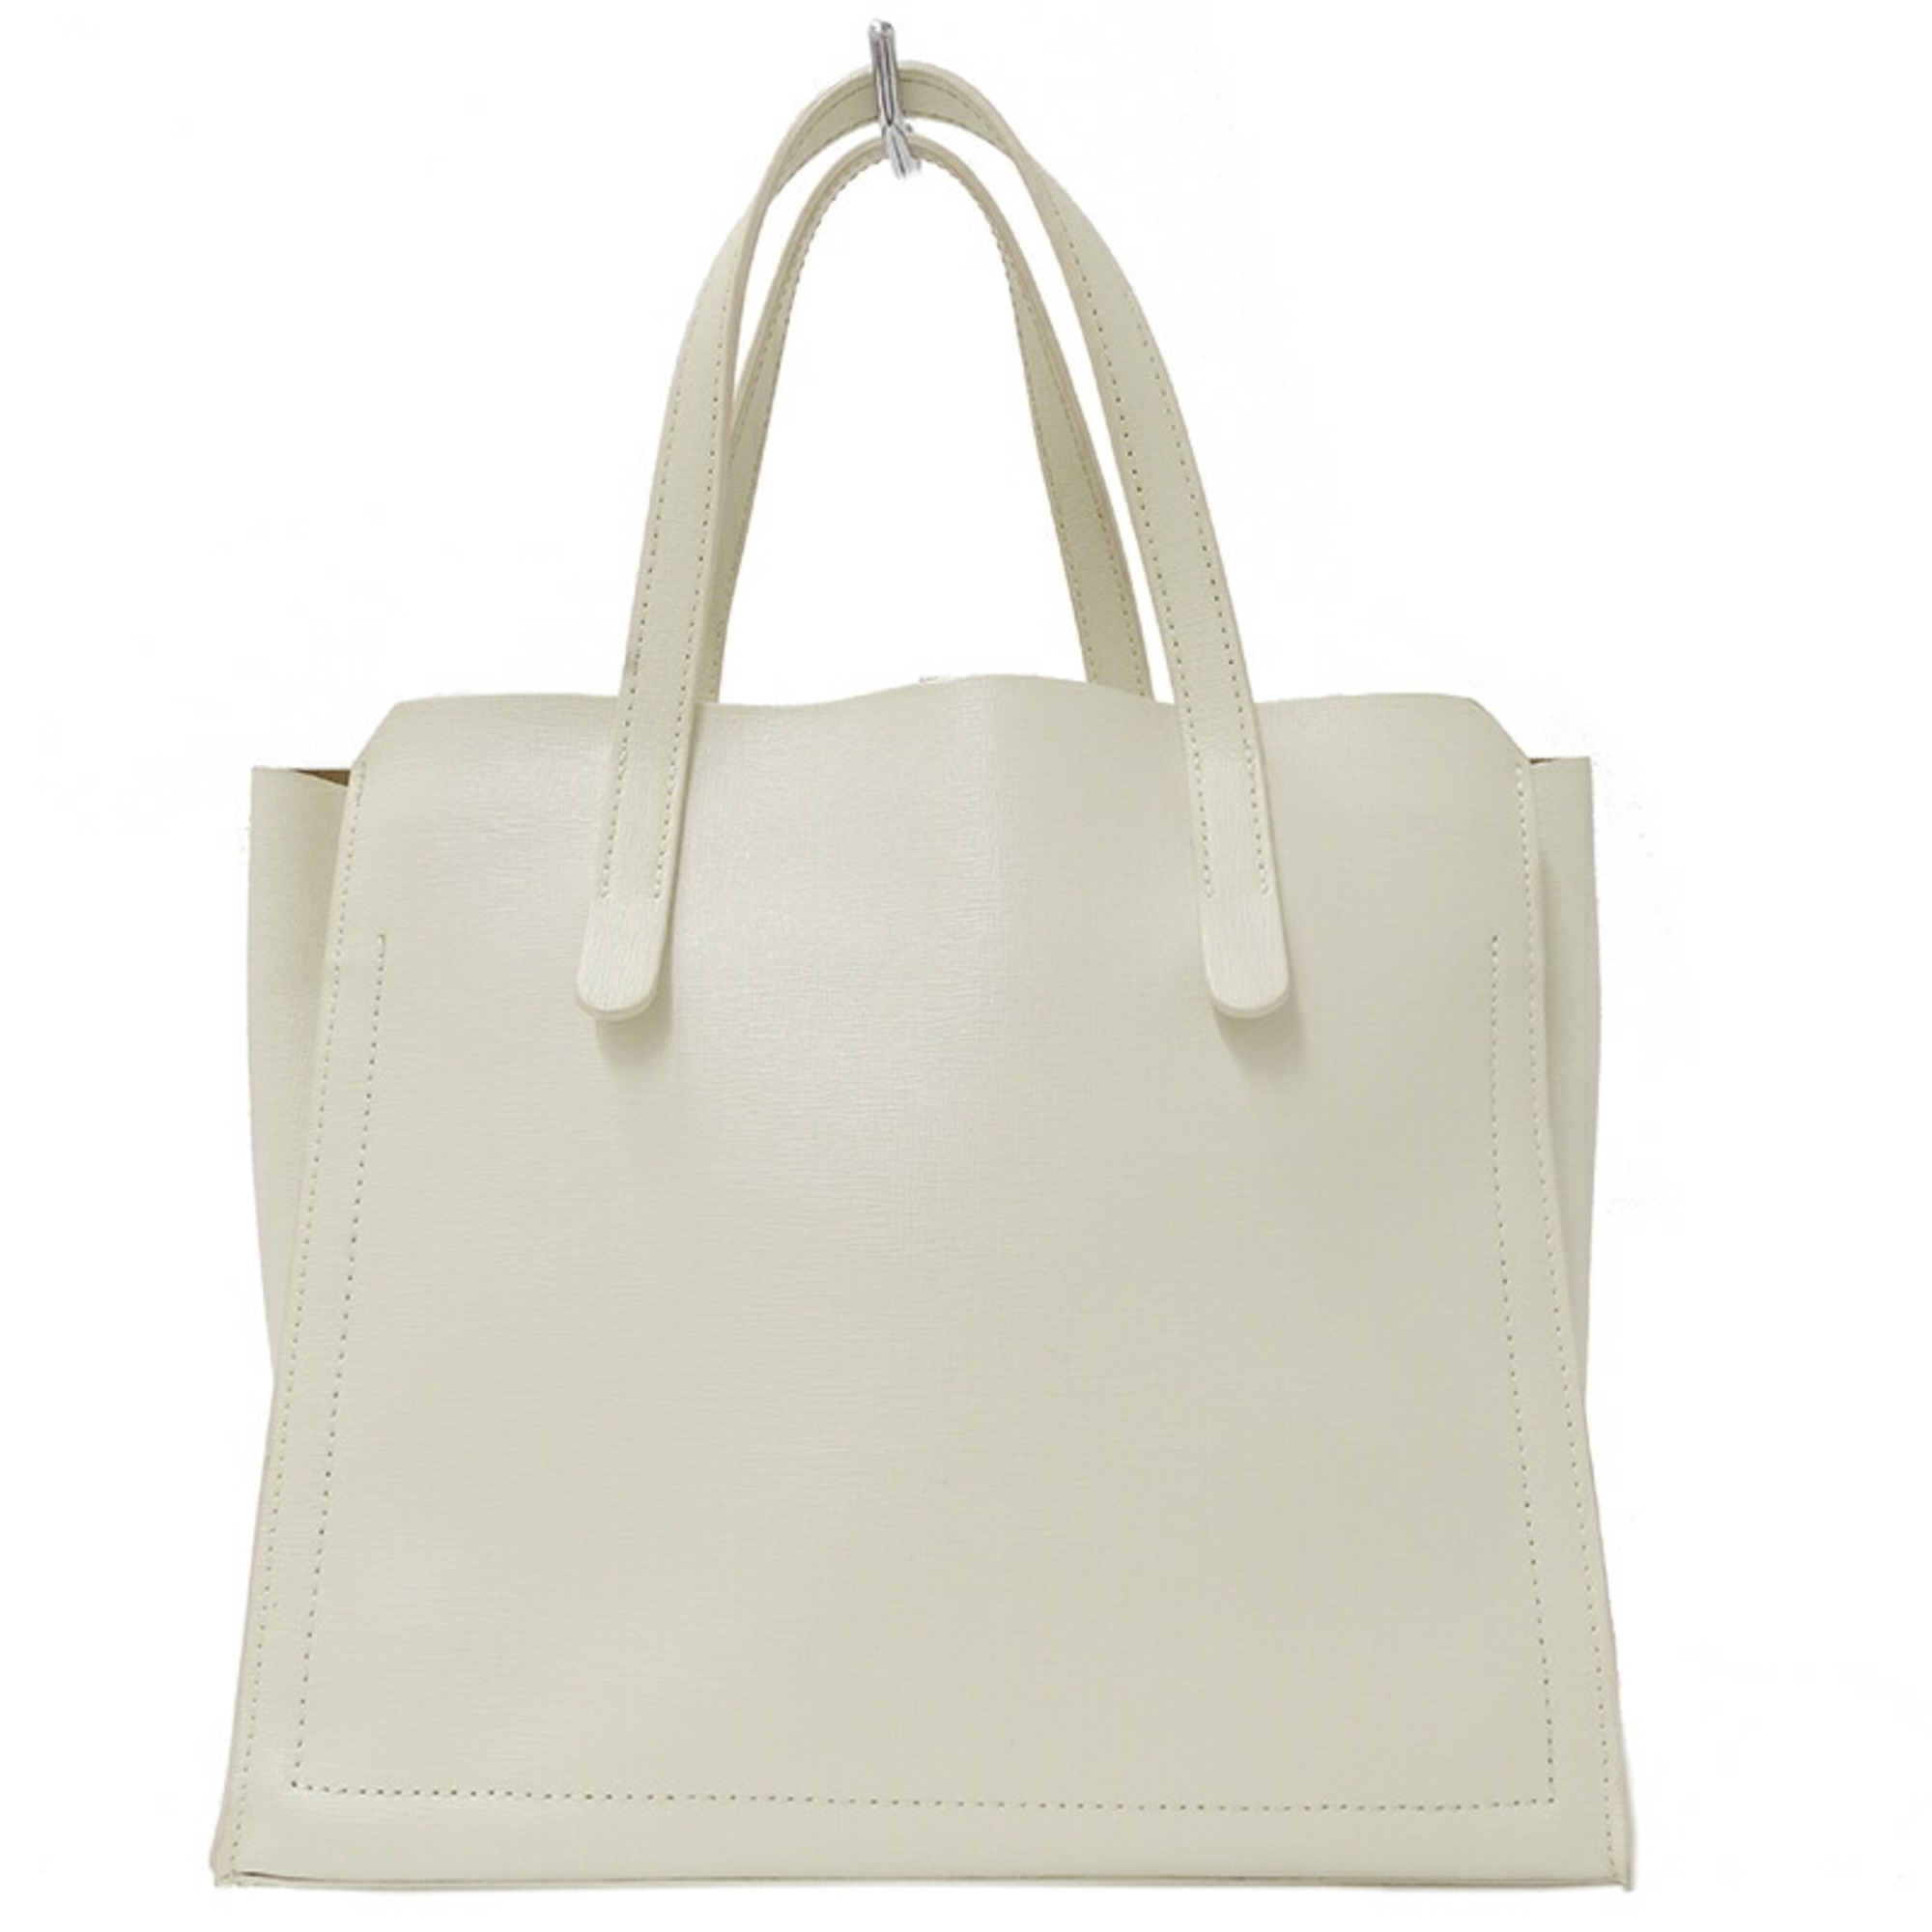 Furla Women's Bag, Sally S, Handbag, Leather, White